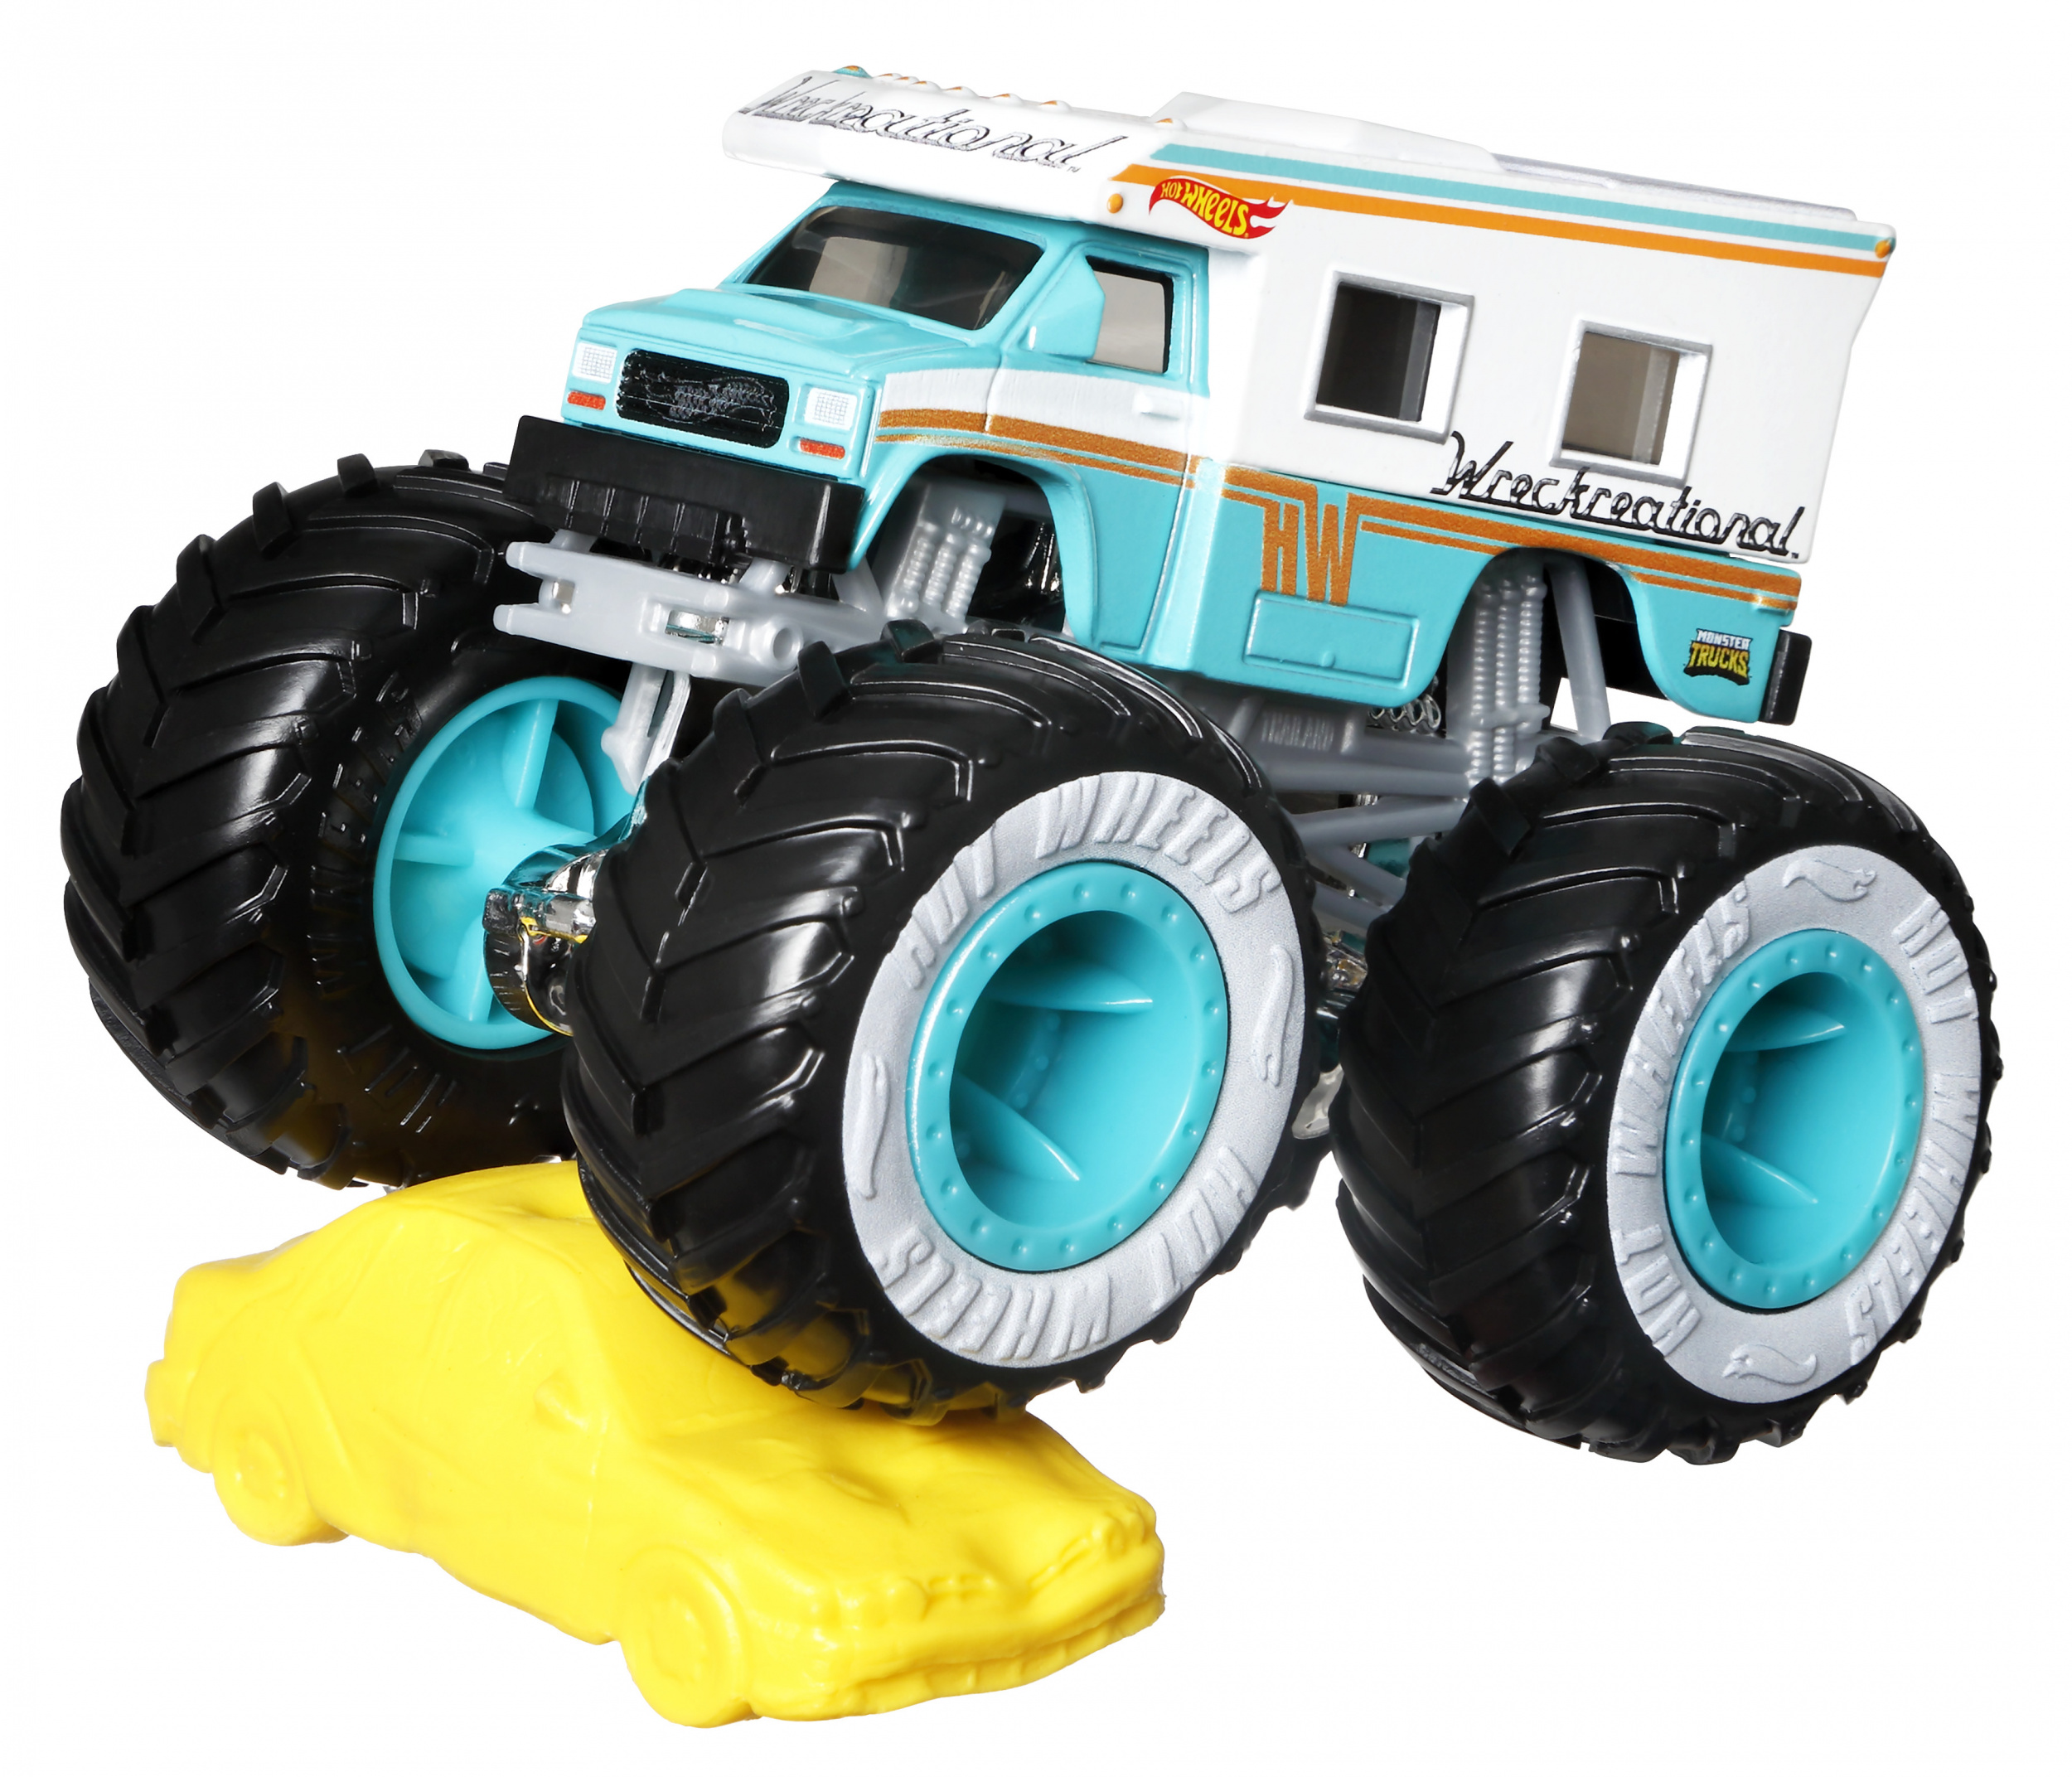 Hot Wheels Monster Trucks 1:64 Scale Vehicle - Town Hauler